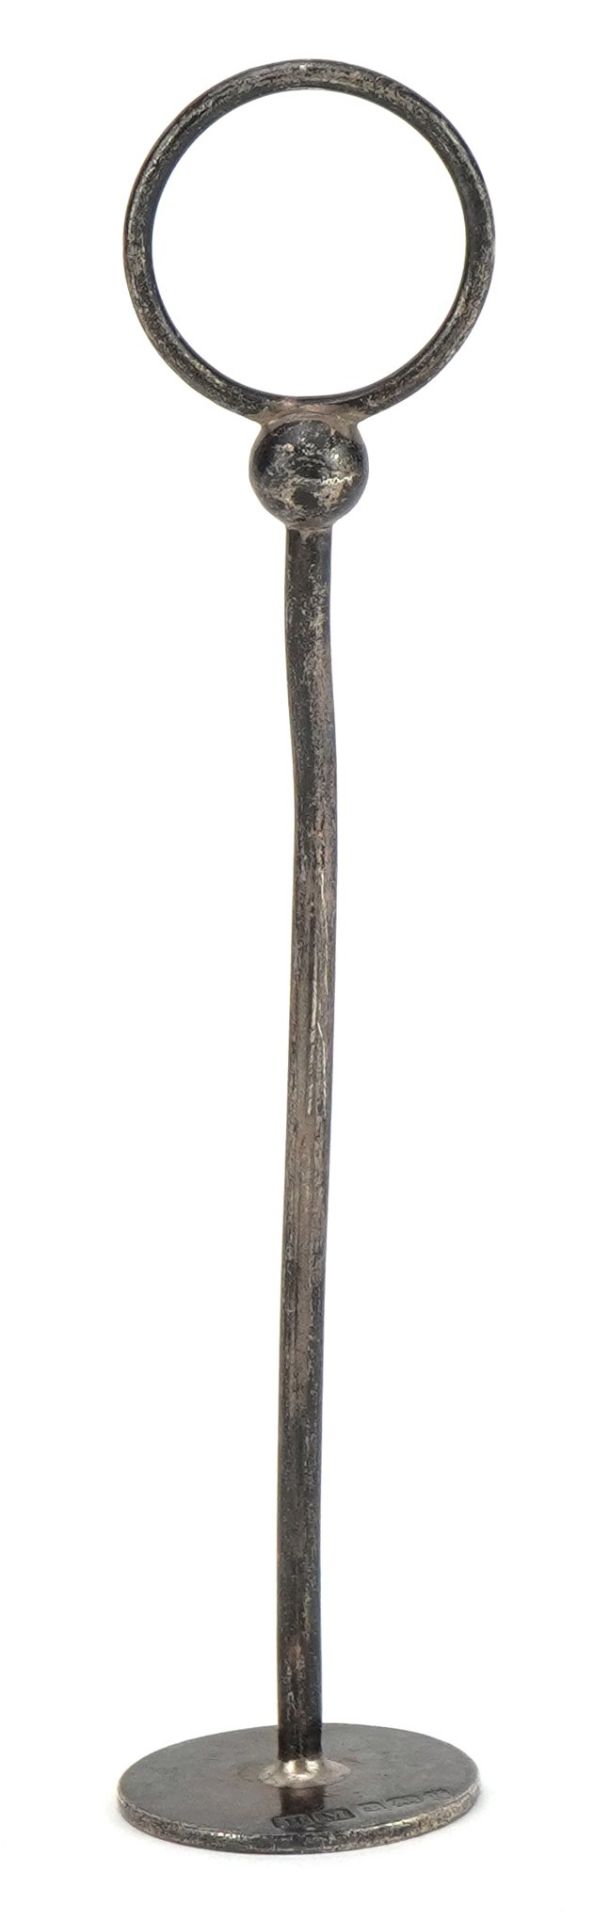 Henry Matthews, Edwardian silver tamper, Birmingham 1906, 11.5cm high, 13.8g